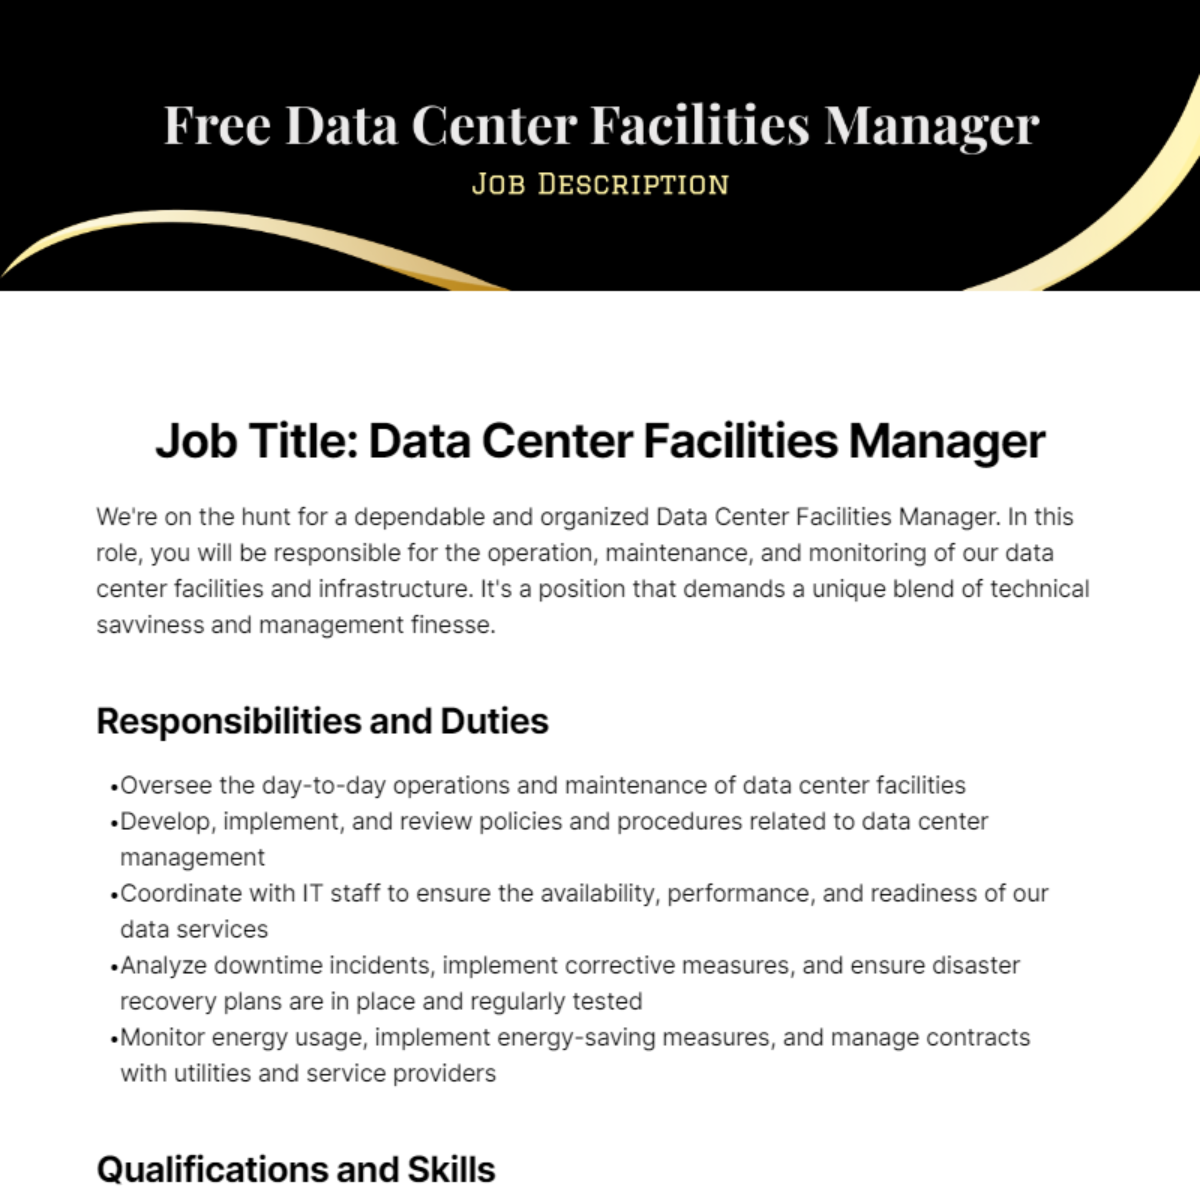 Free Data Center Facilities Manager Job Description Template